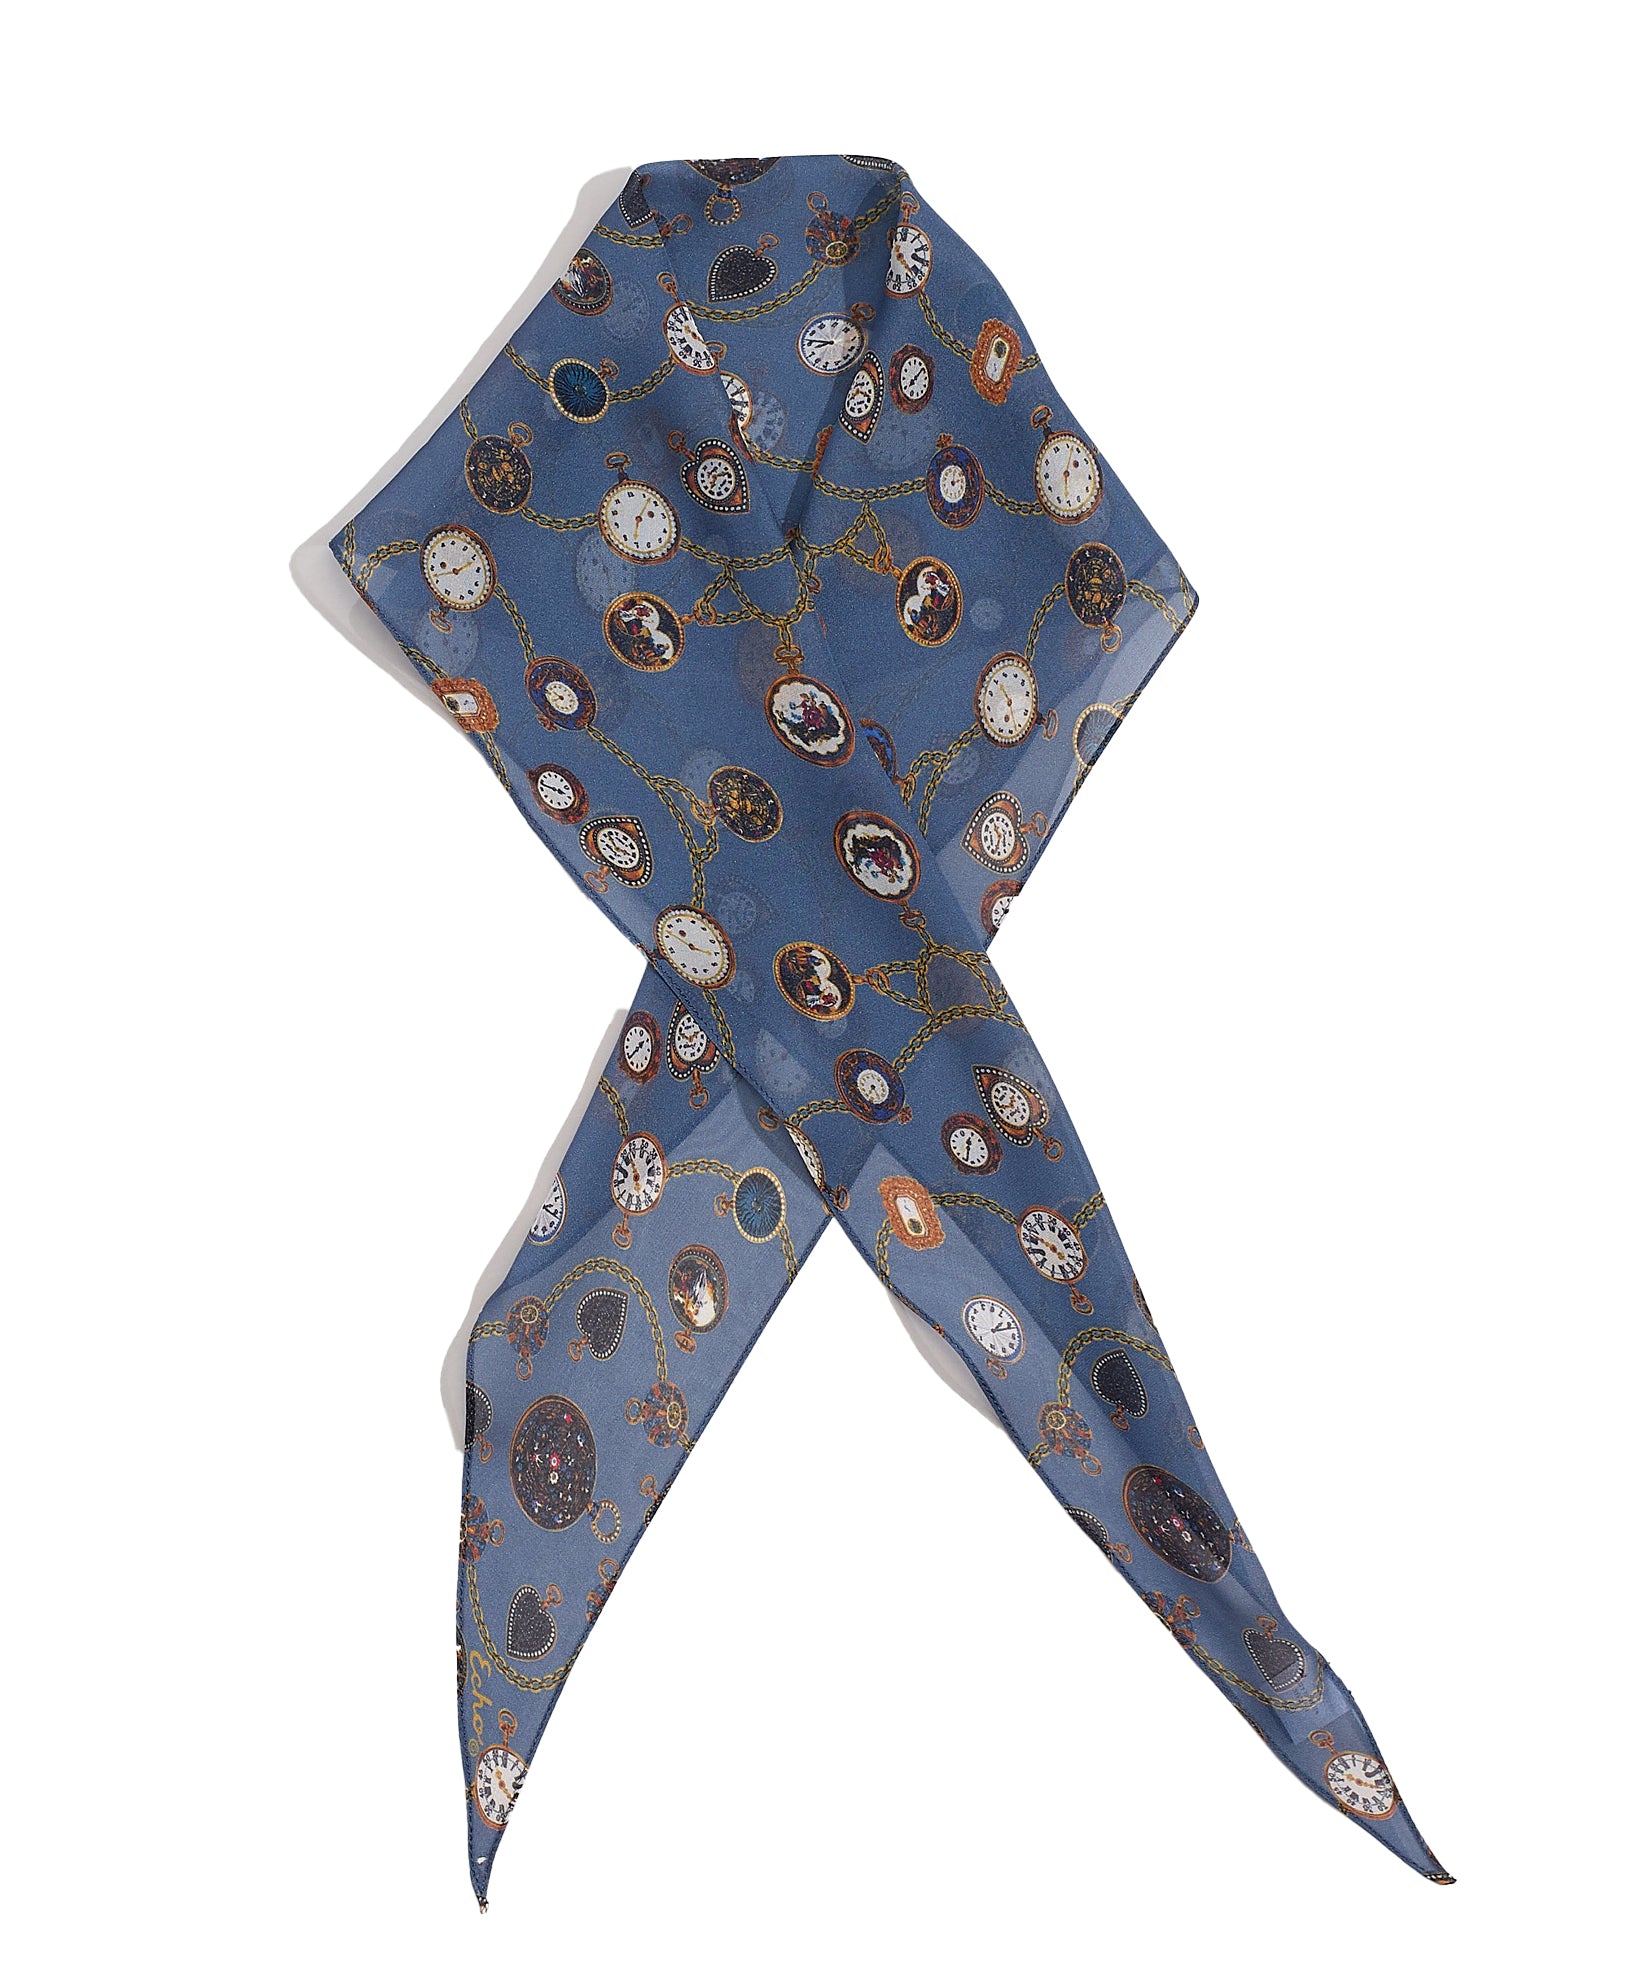 Louis Vuitton Shawl Square Scarf in Monogram Blue Denim - SOLD